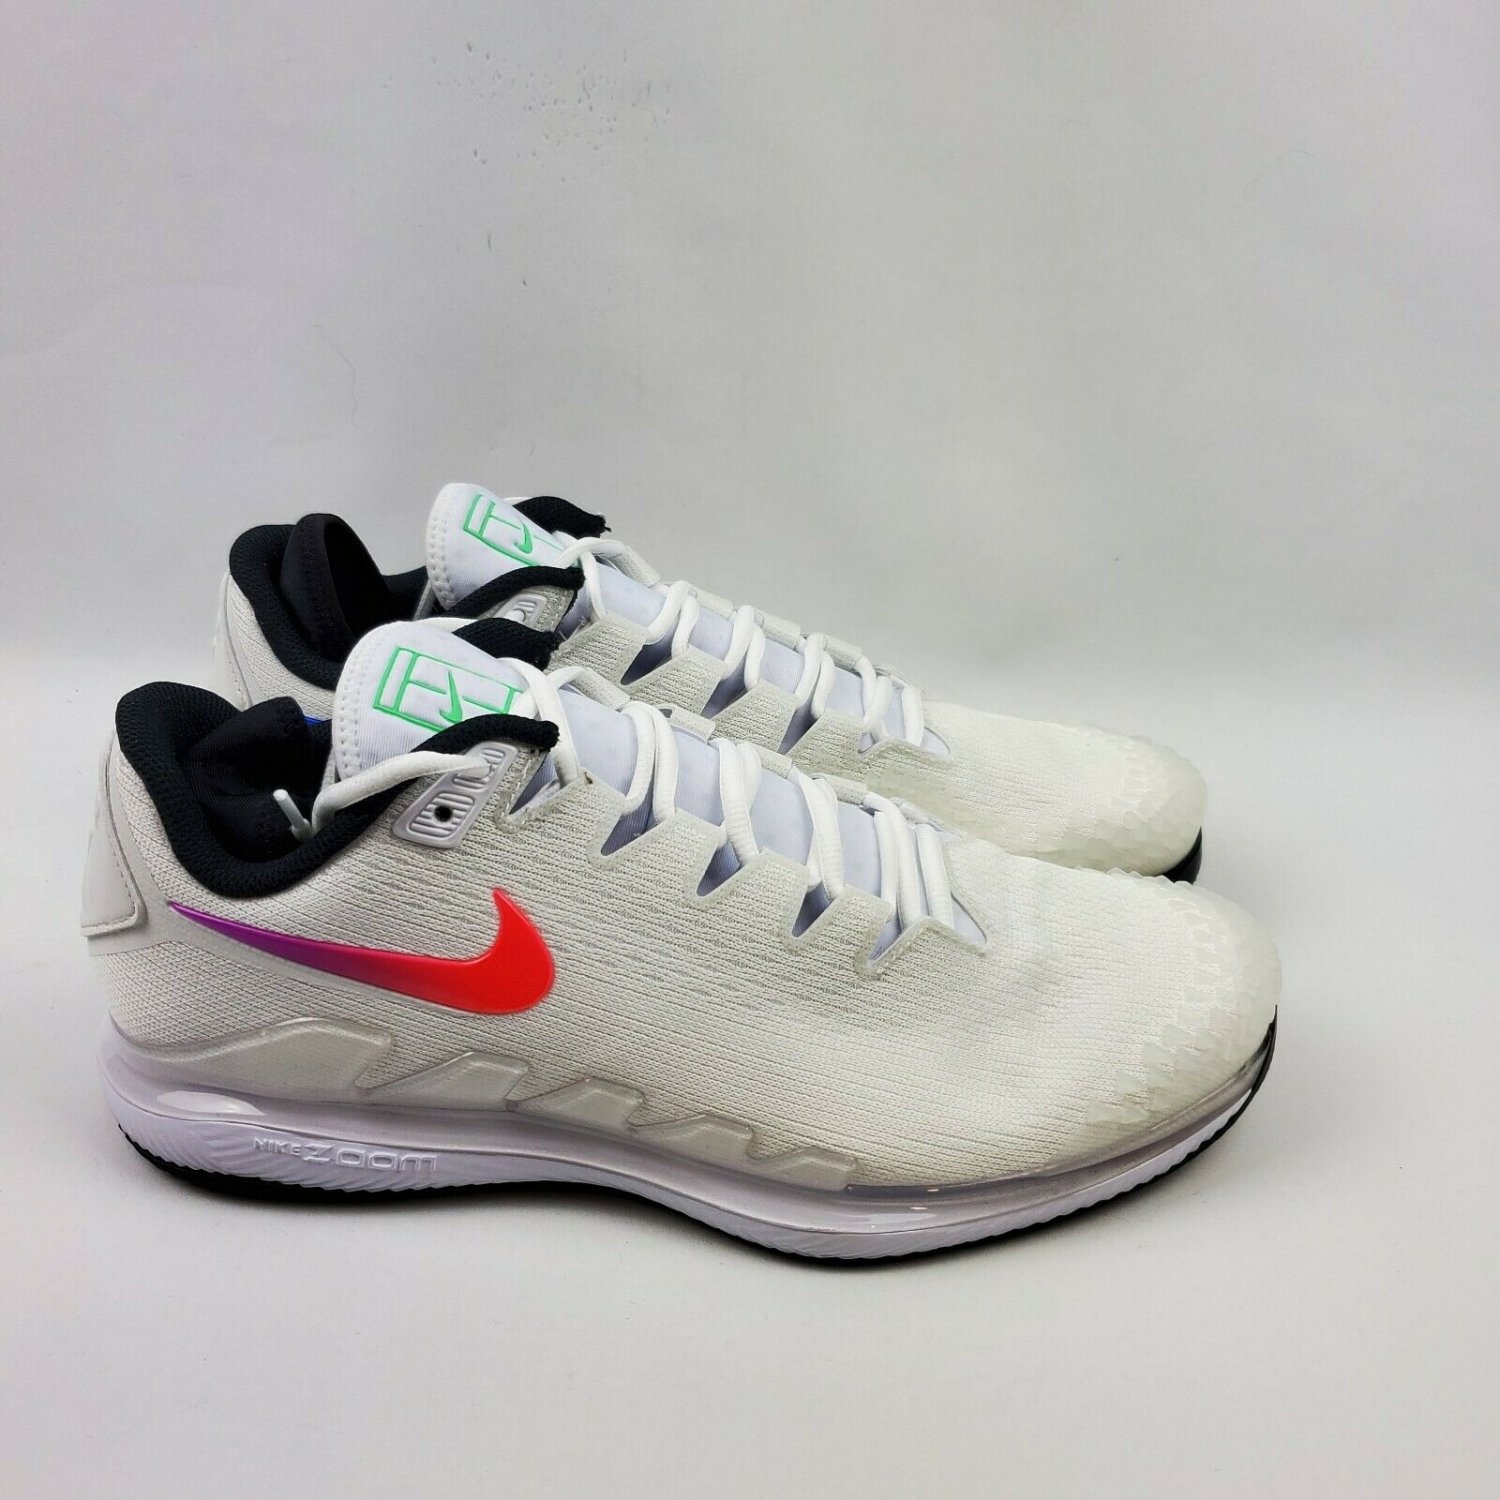 Nike Men Court Air Zoom Vapor X Knit Tennis Shoes White AR0496 112 Size 11